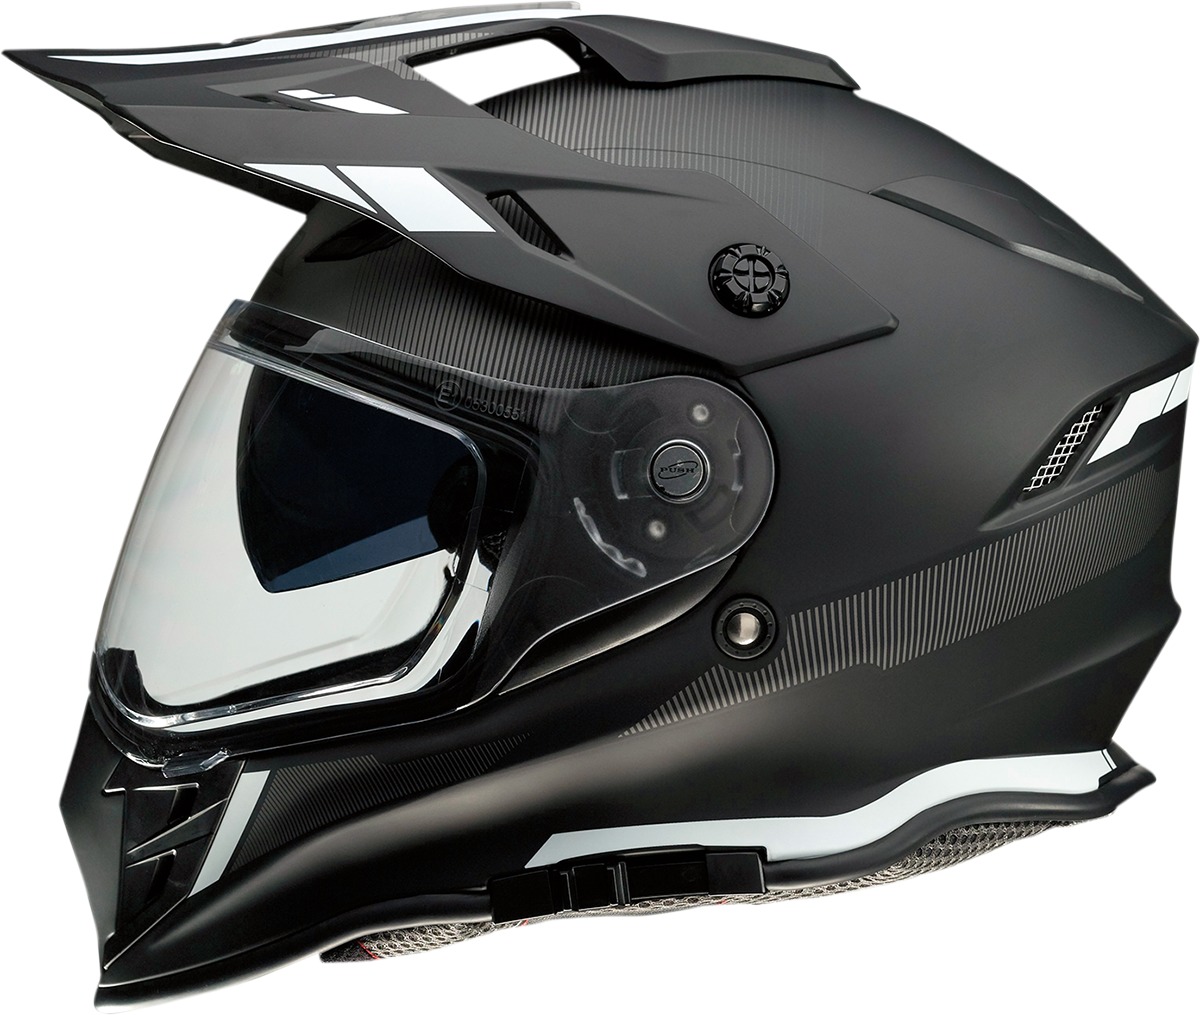 Range Dual Sport Helmet X-Large - Uptake Black/White - Click Image to Close